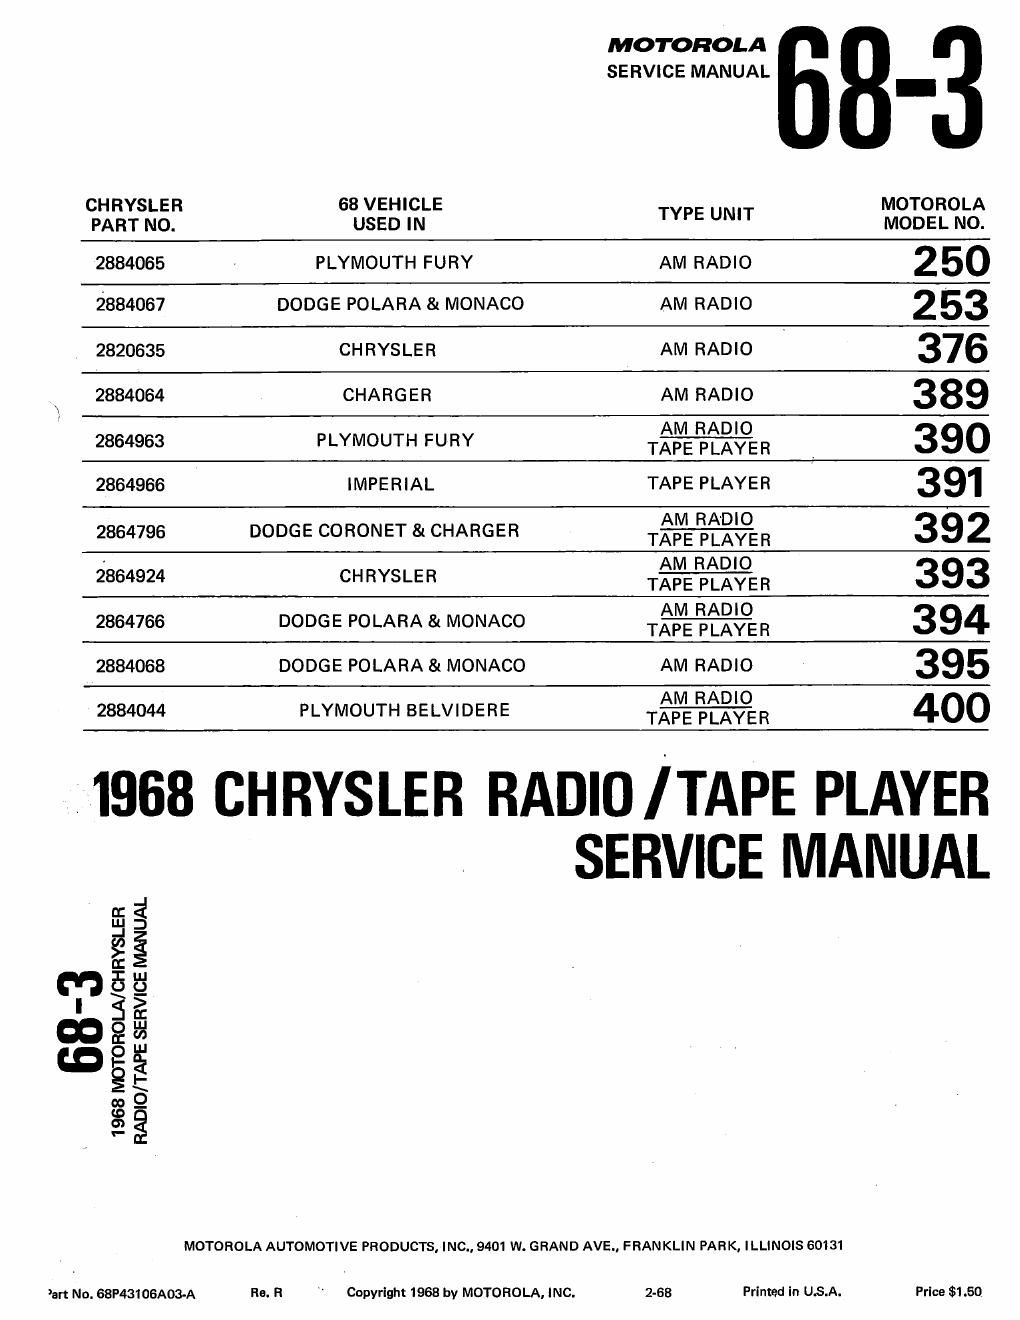 motorola 391 service manual